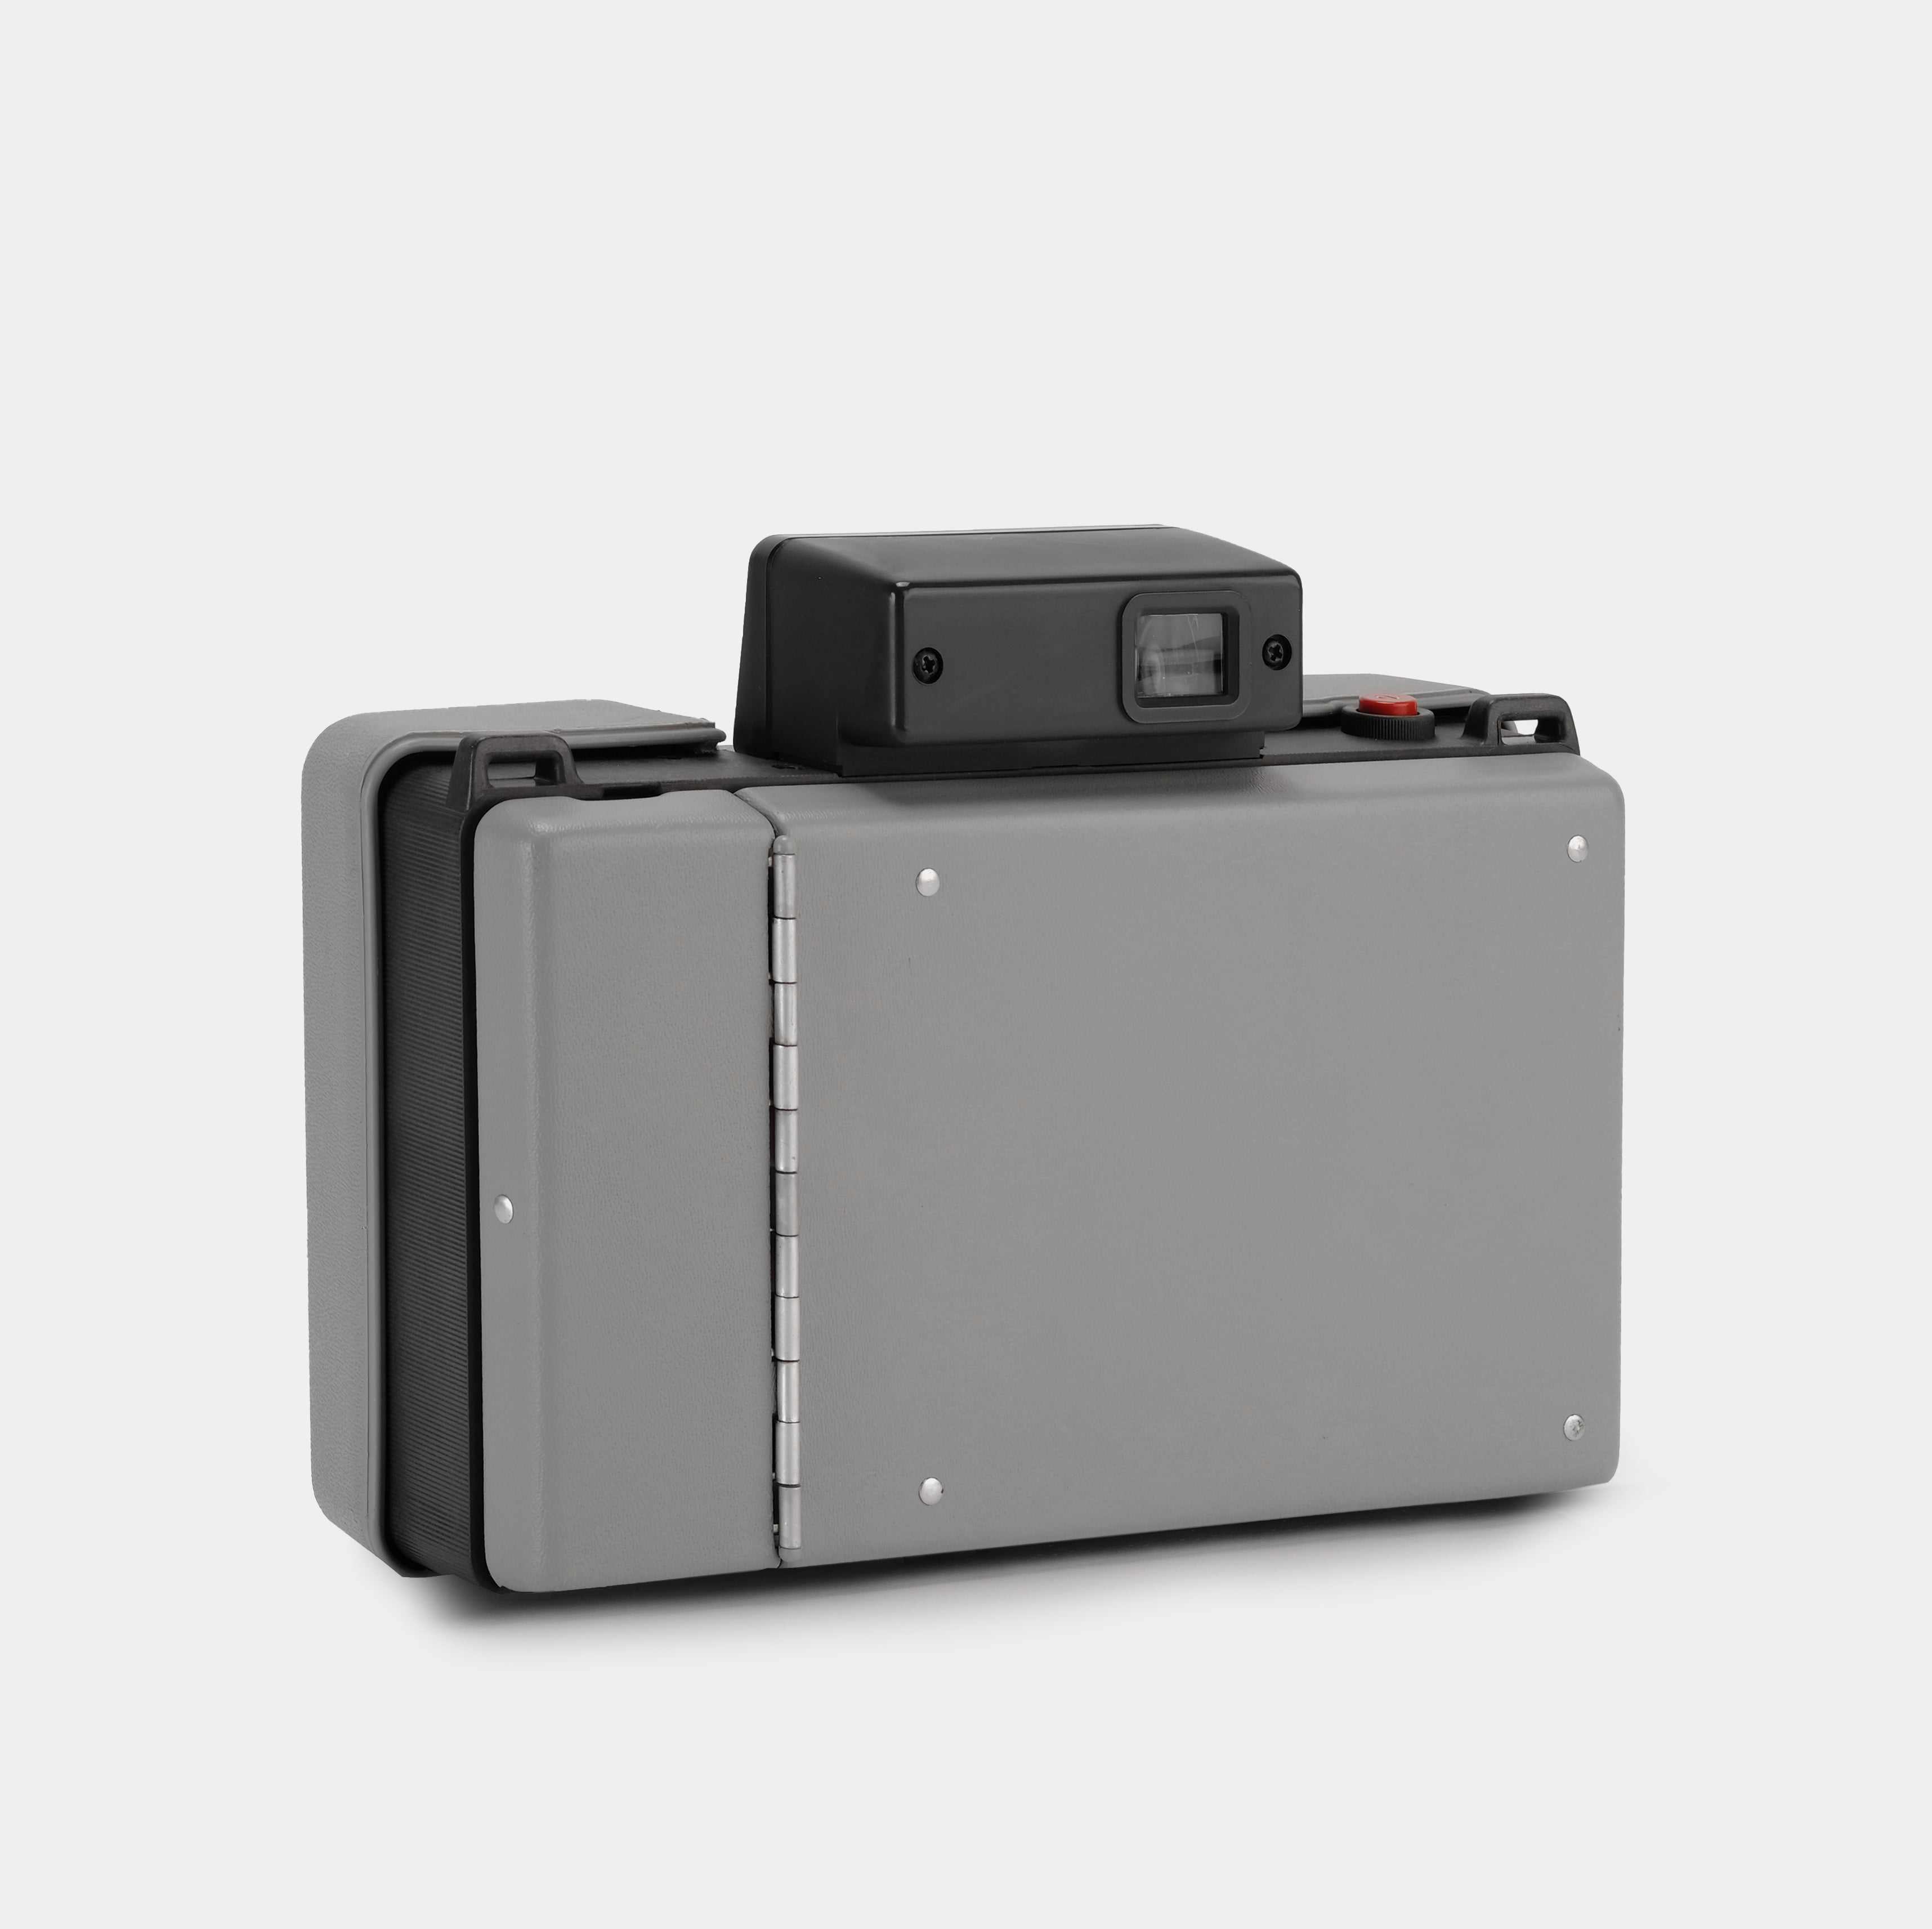 Polaroid Model 104 Packfilm Land Camera